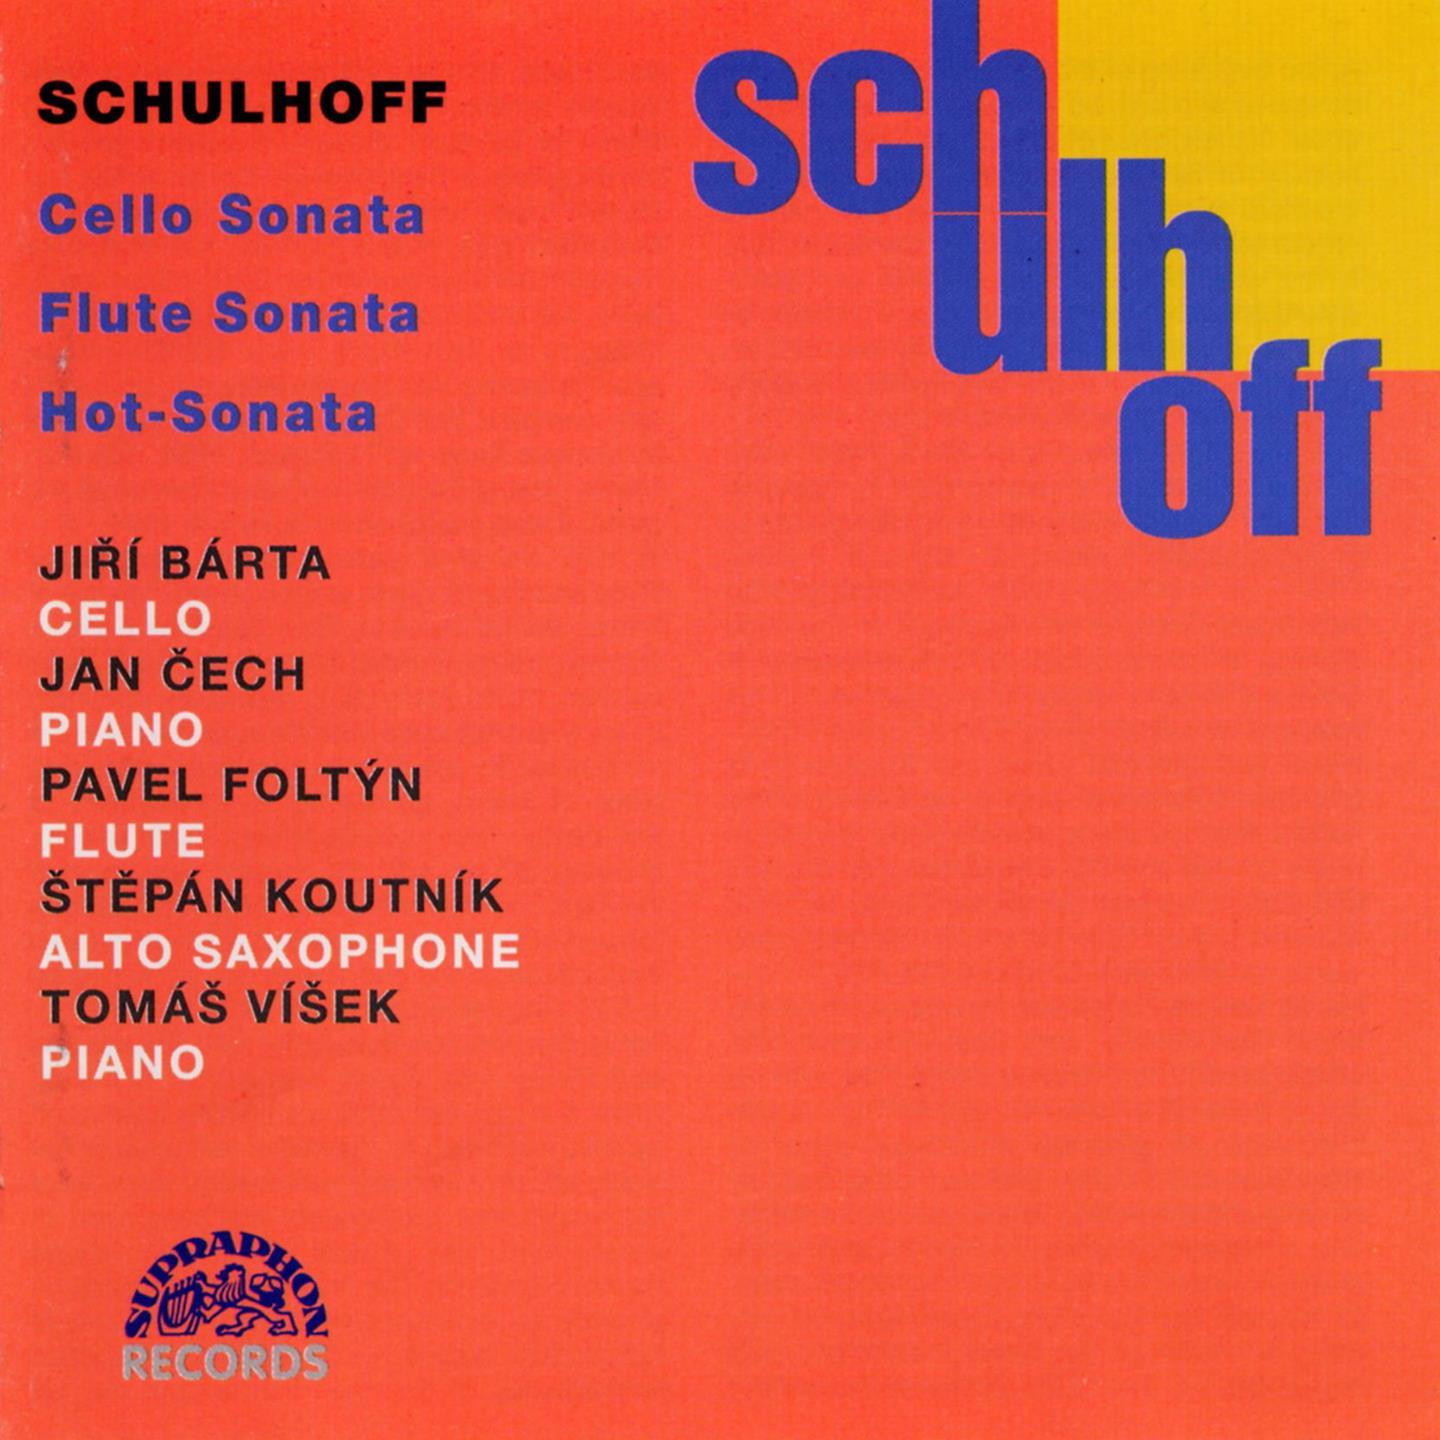 Schulhoff: Cello Sonata, Flute Sonata, Hot-Sonate